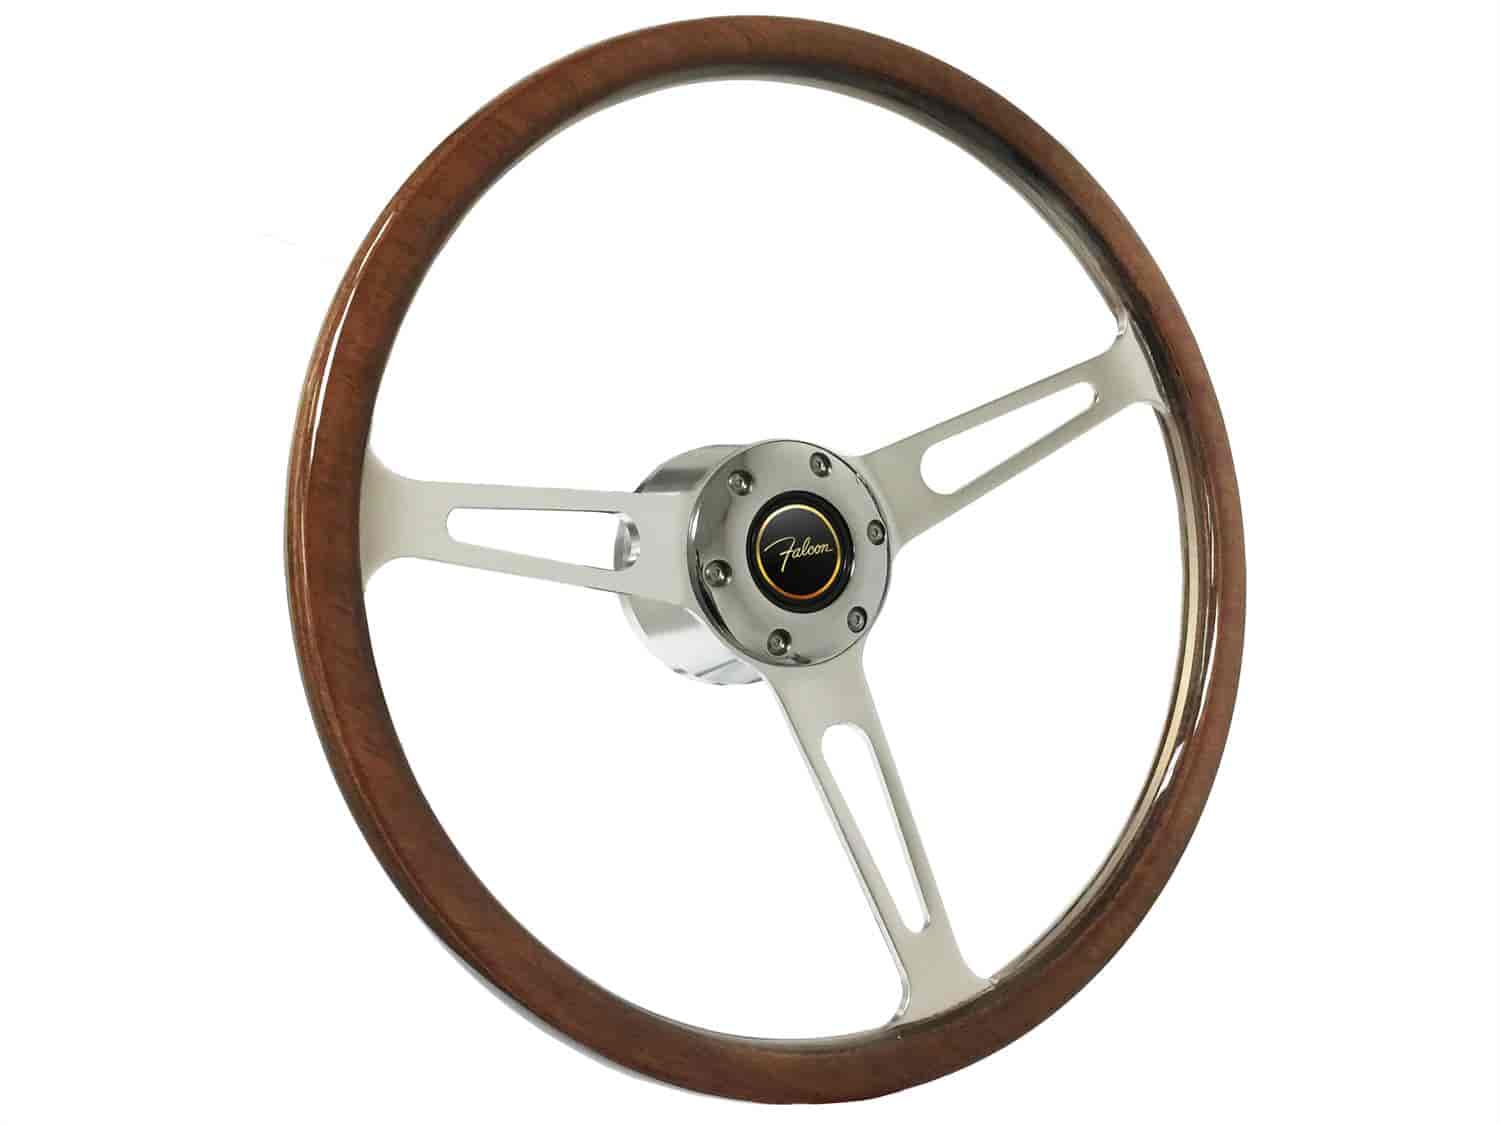 S6 Classic Steering Wheel Kit 1964-1972 Ford/Mercury, 15 in. Diameter, Deluxe Walnut Wood Grip, w/ 6-Bolt Adapter & Horn Button